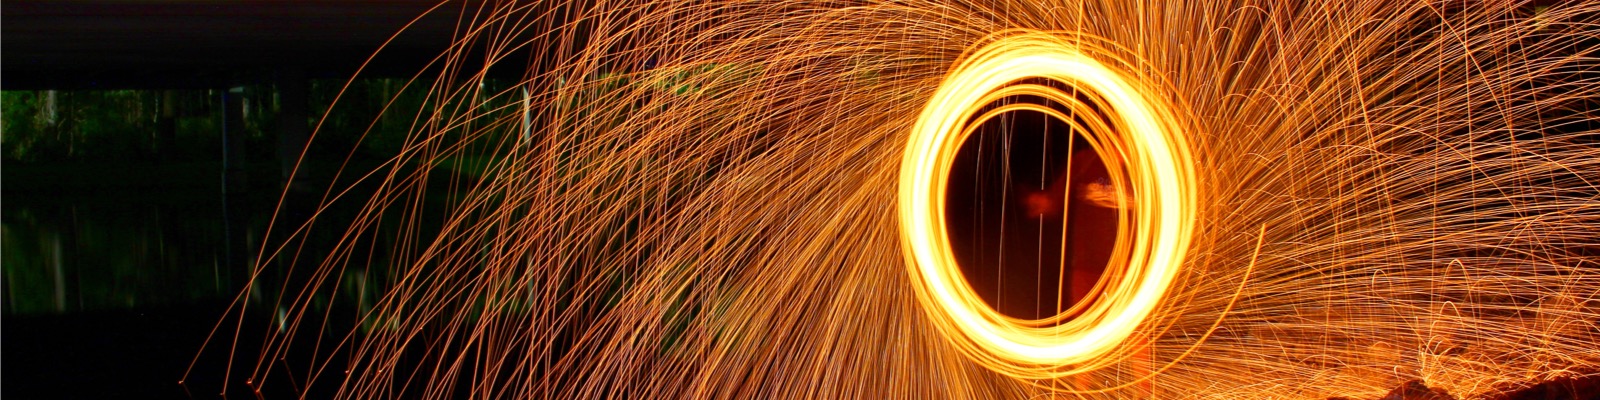 Circular blaze of sparks at night